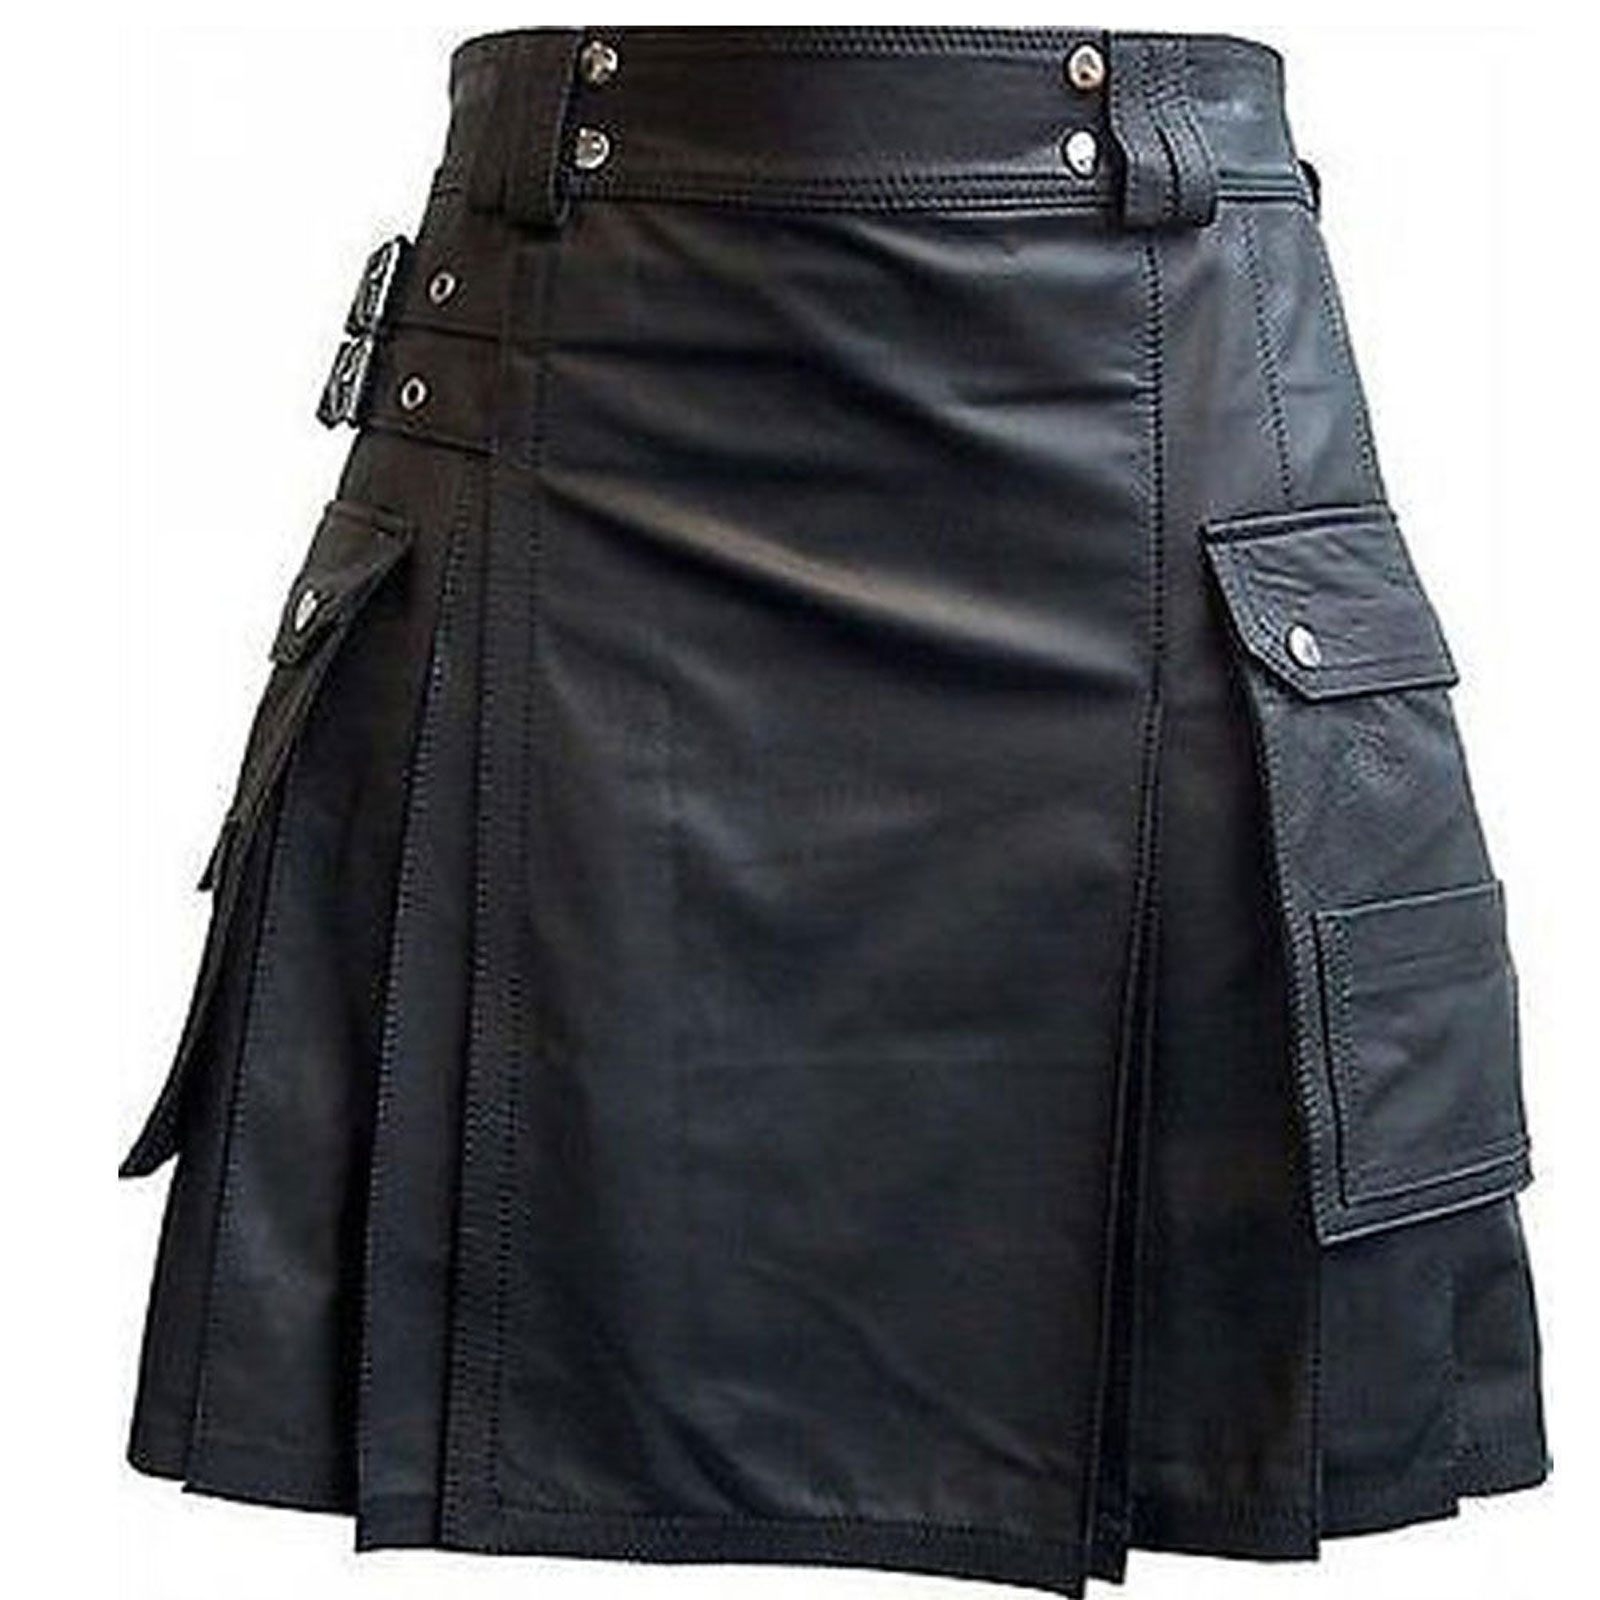 Stylish Black Leather Kilt with Twin Cargo Pockets